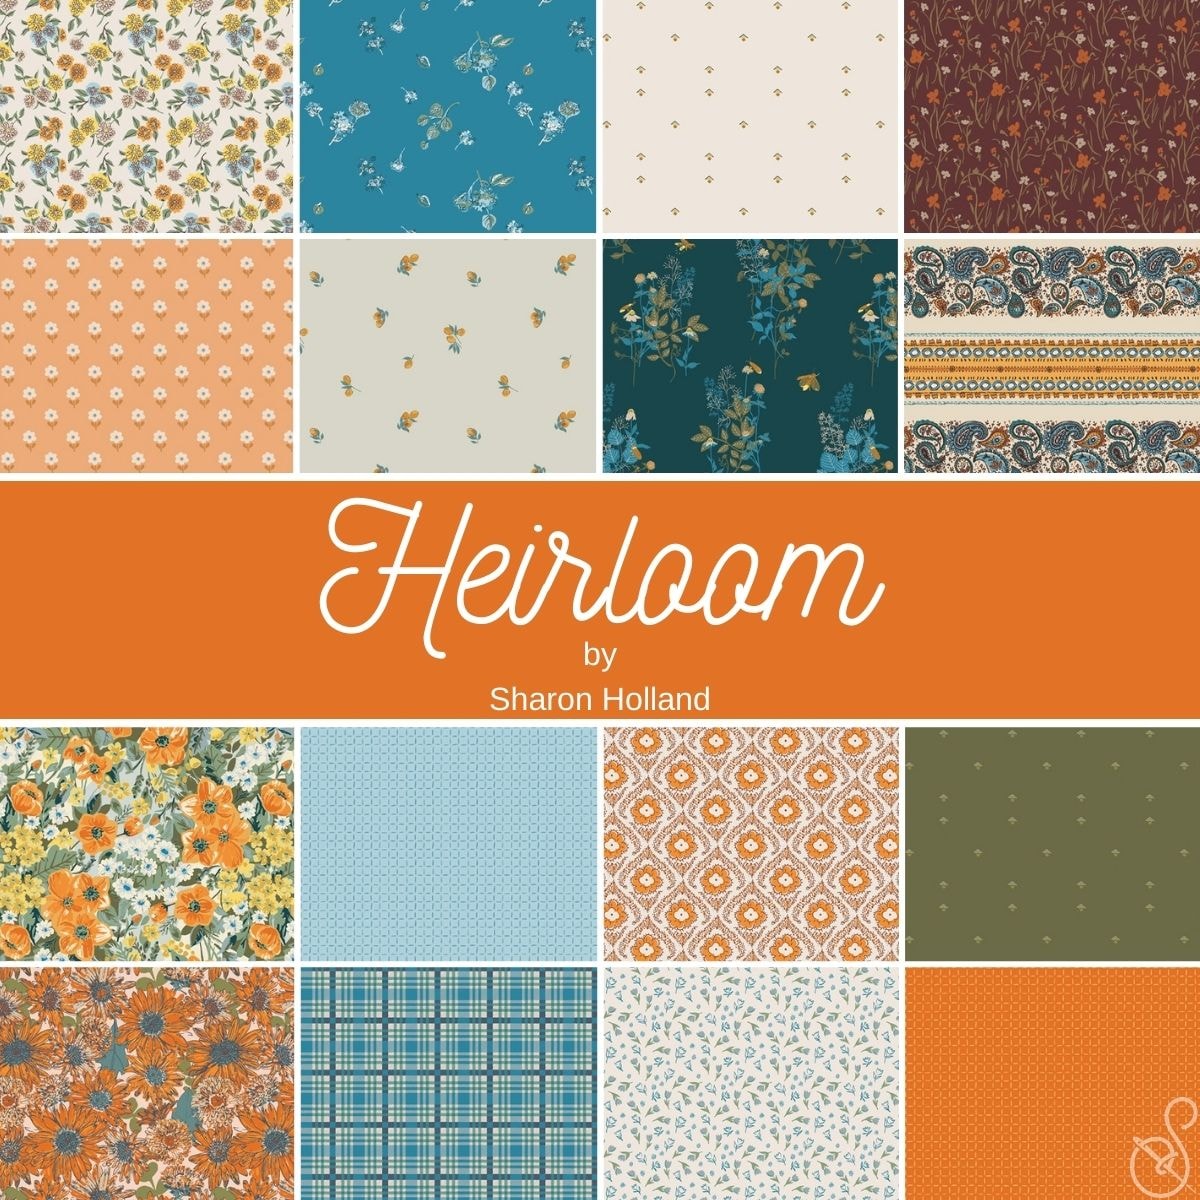 Heirloom Layer Cake | Sharon Holland | 42 PCs